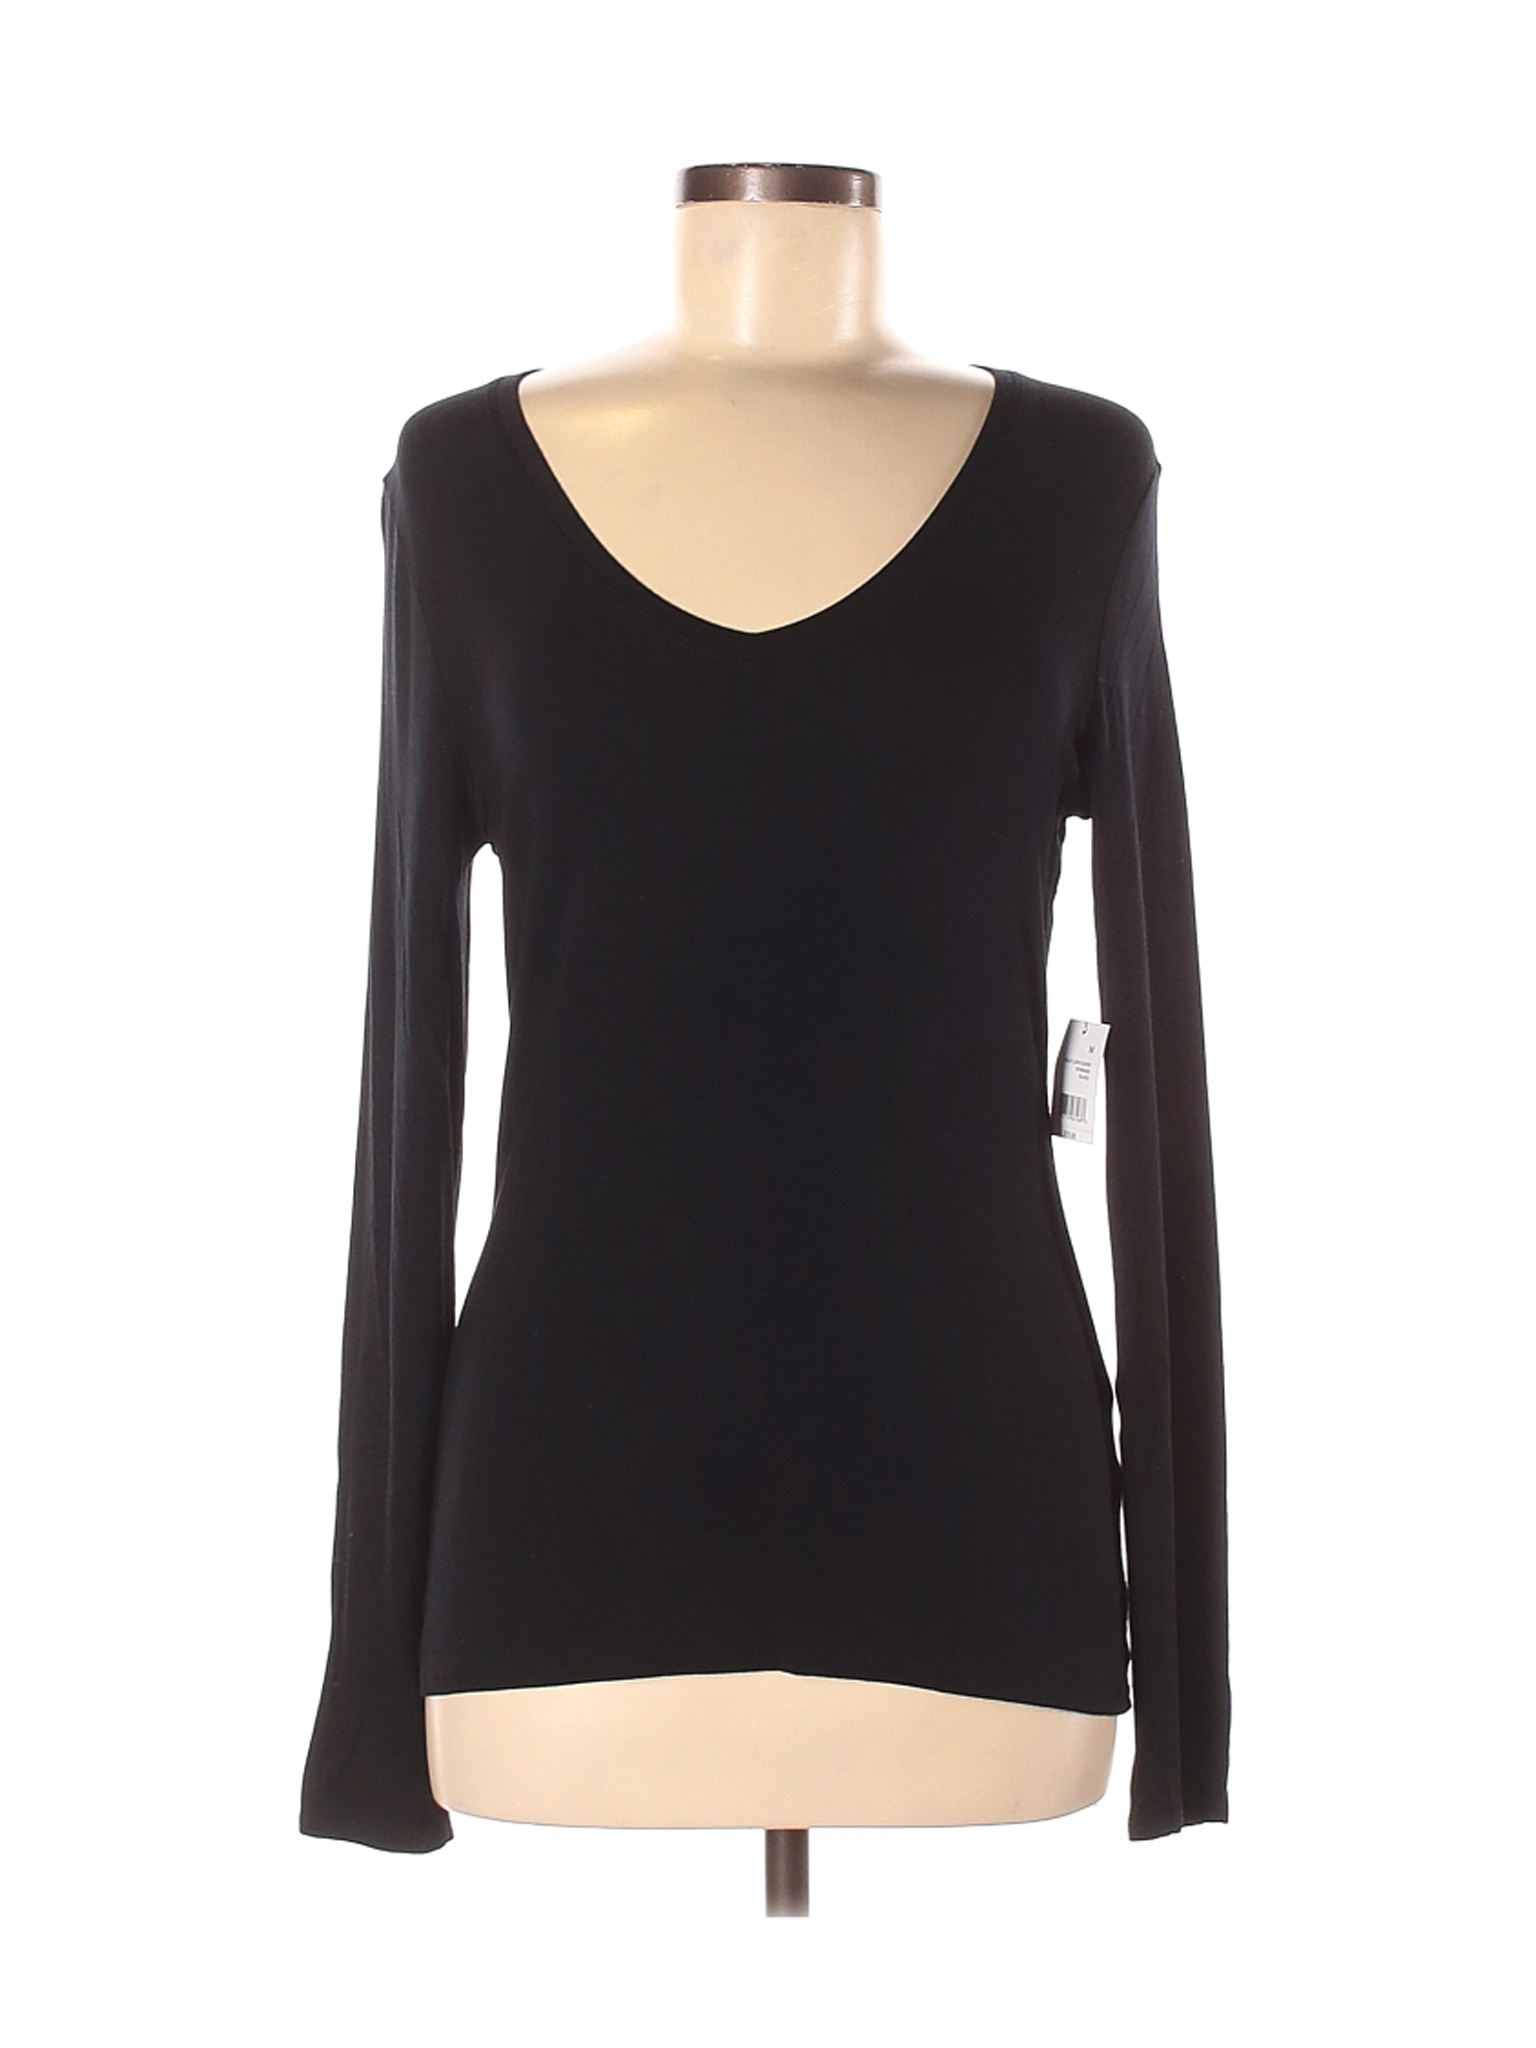 NWT Tahari Women Black Long Sleeve T-Shirt M | eBay